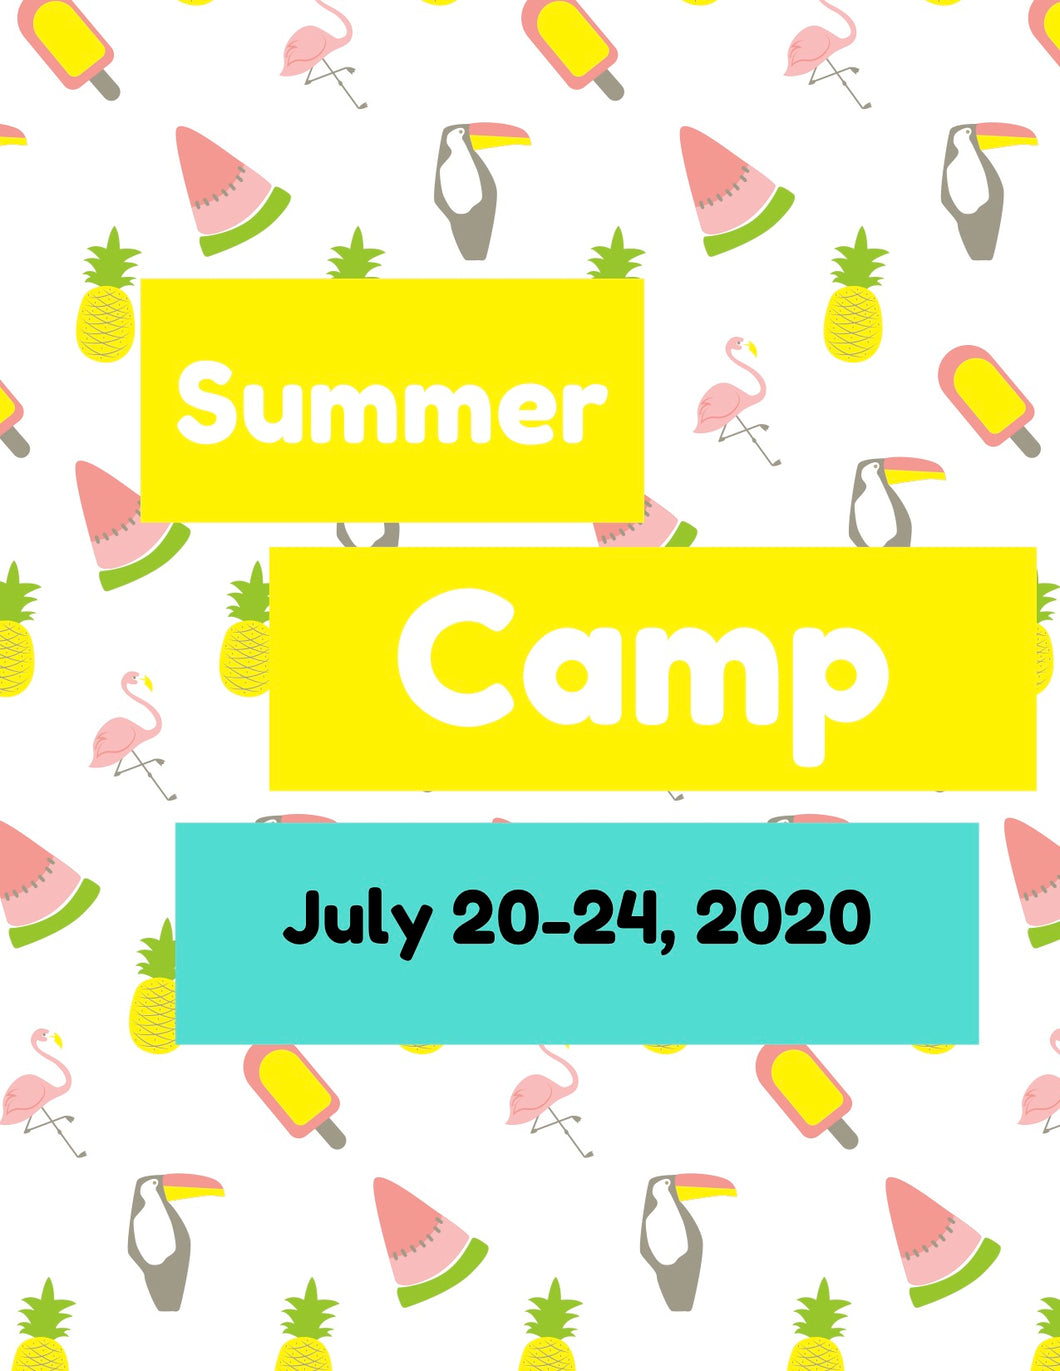 Summer Camp July 20-24, 2020